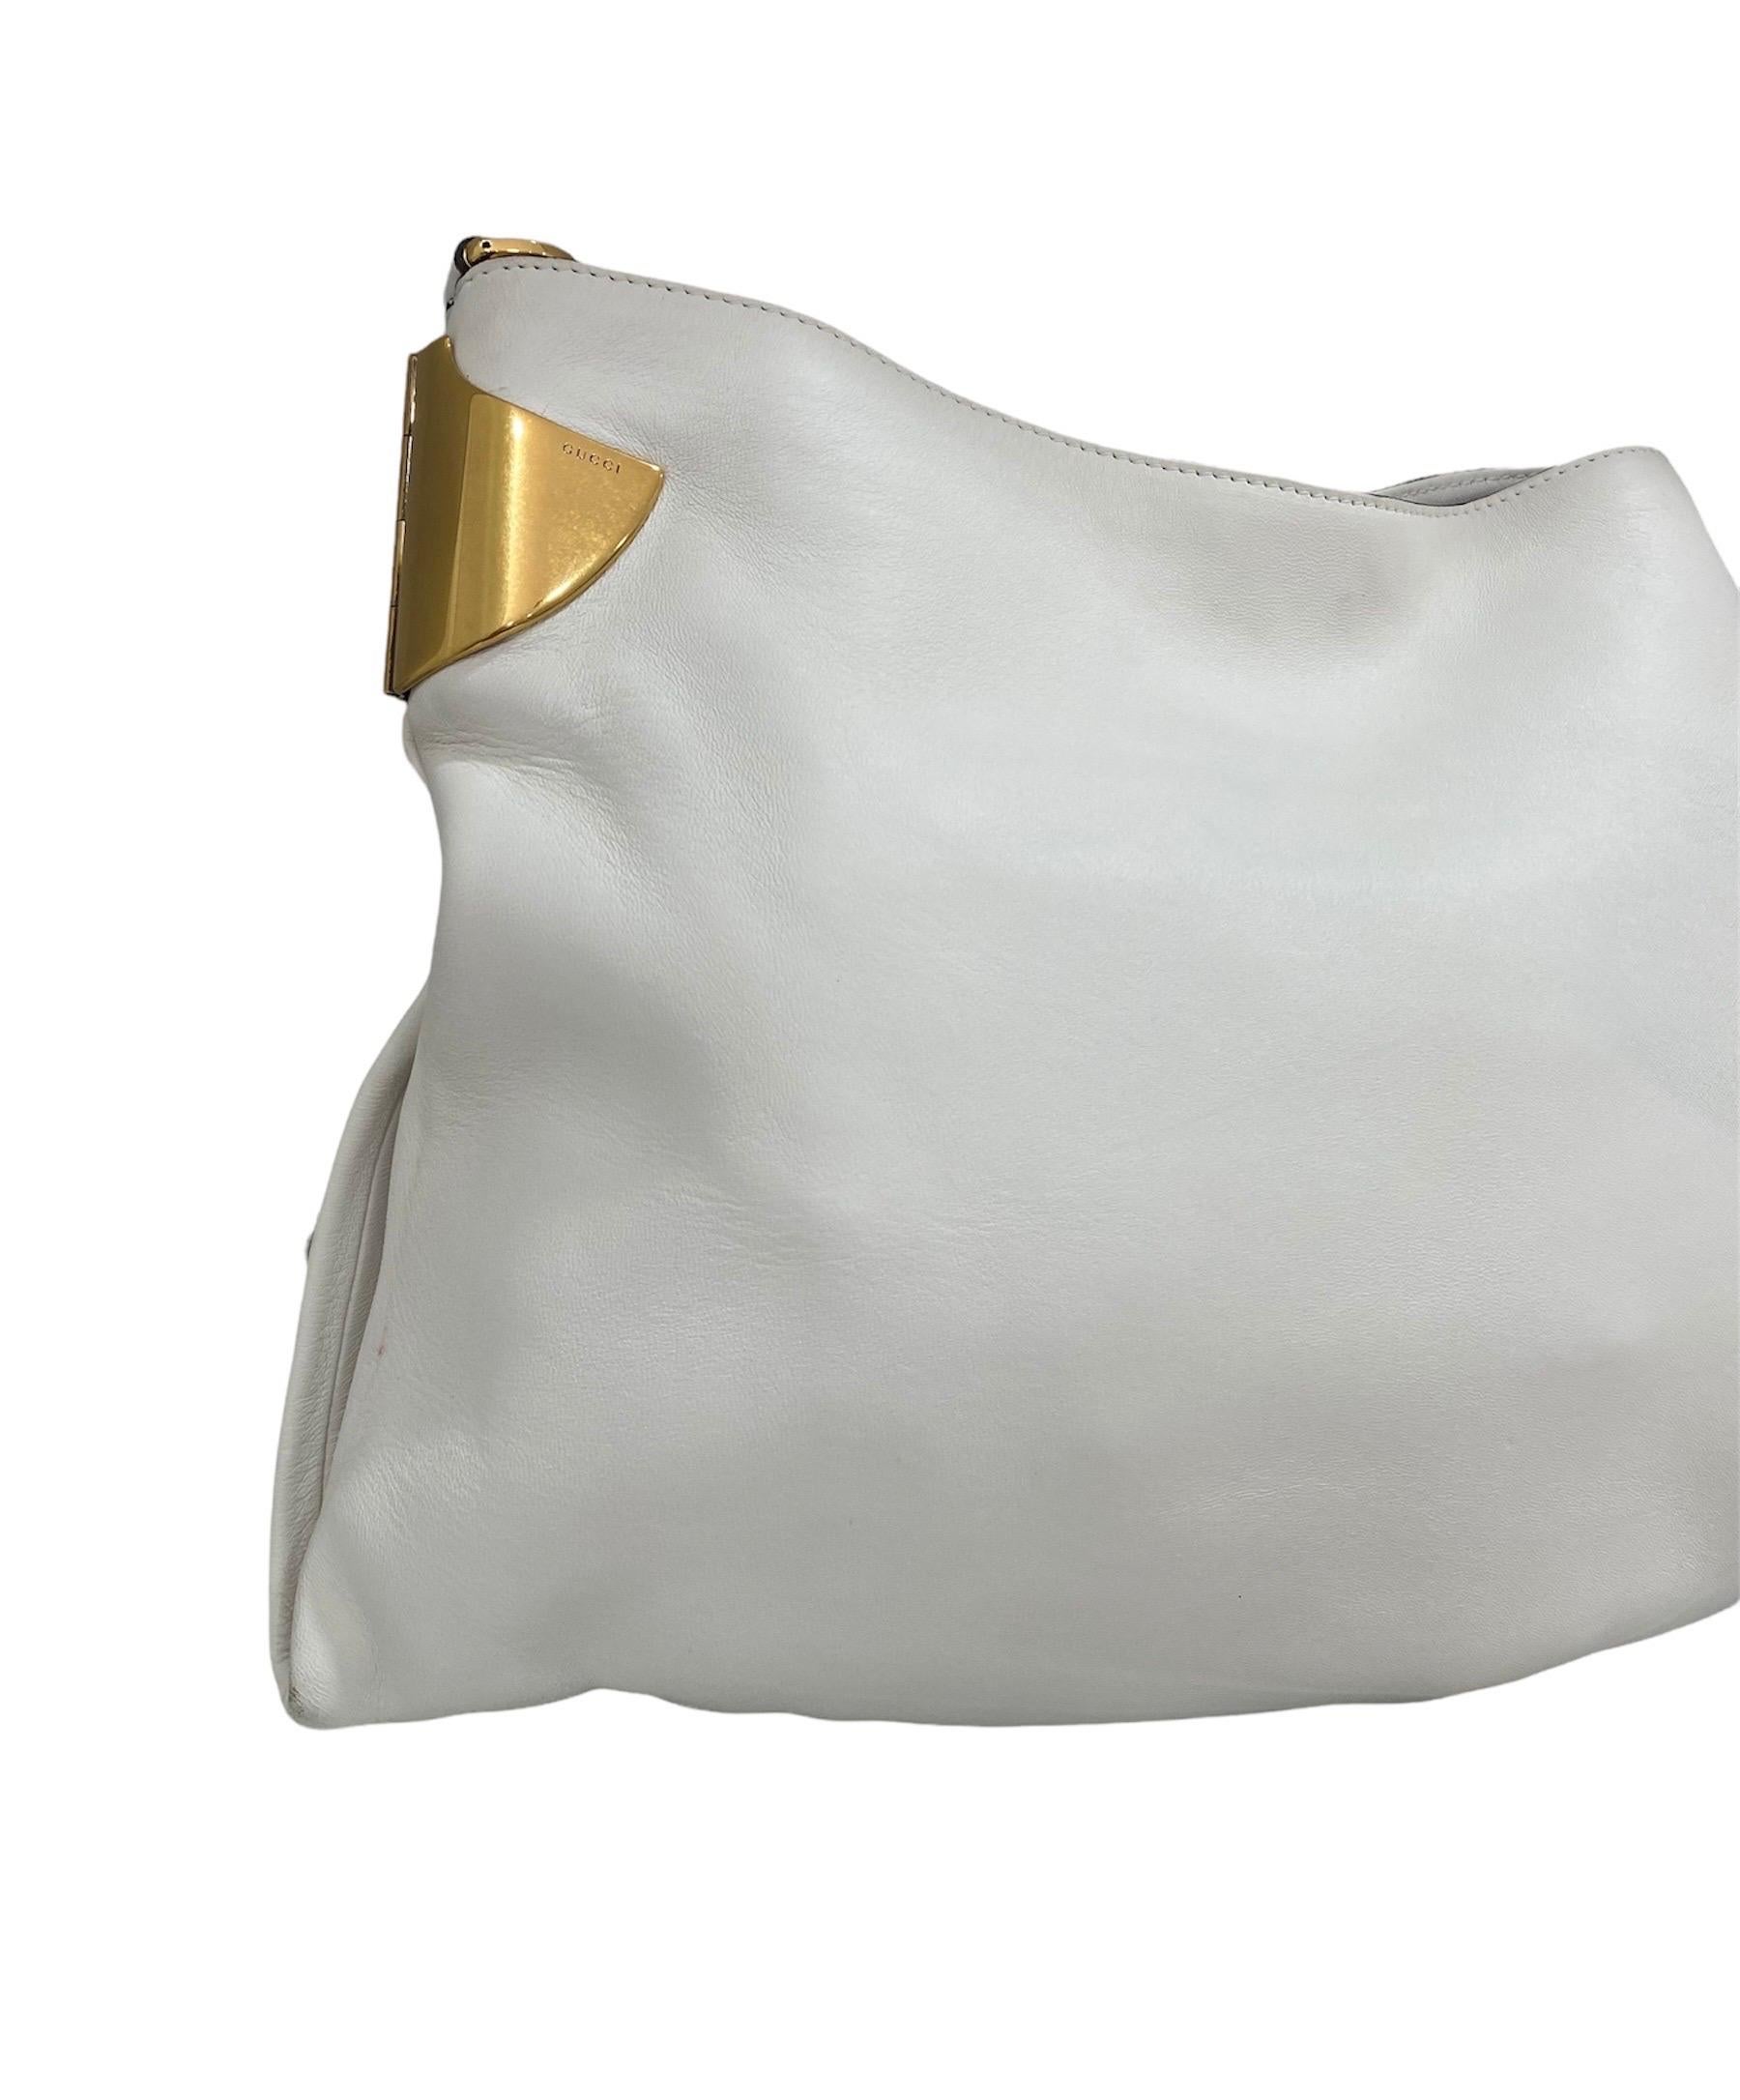 Women's Gucci Shoulder Bag White And Gold Borsa a spalla For Sale